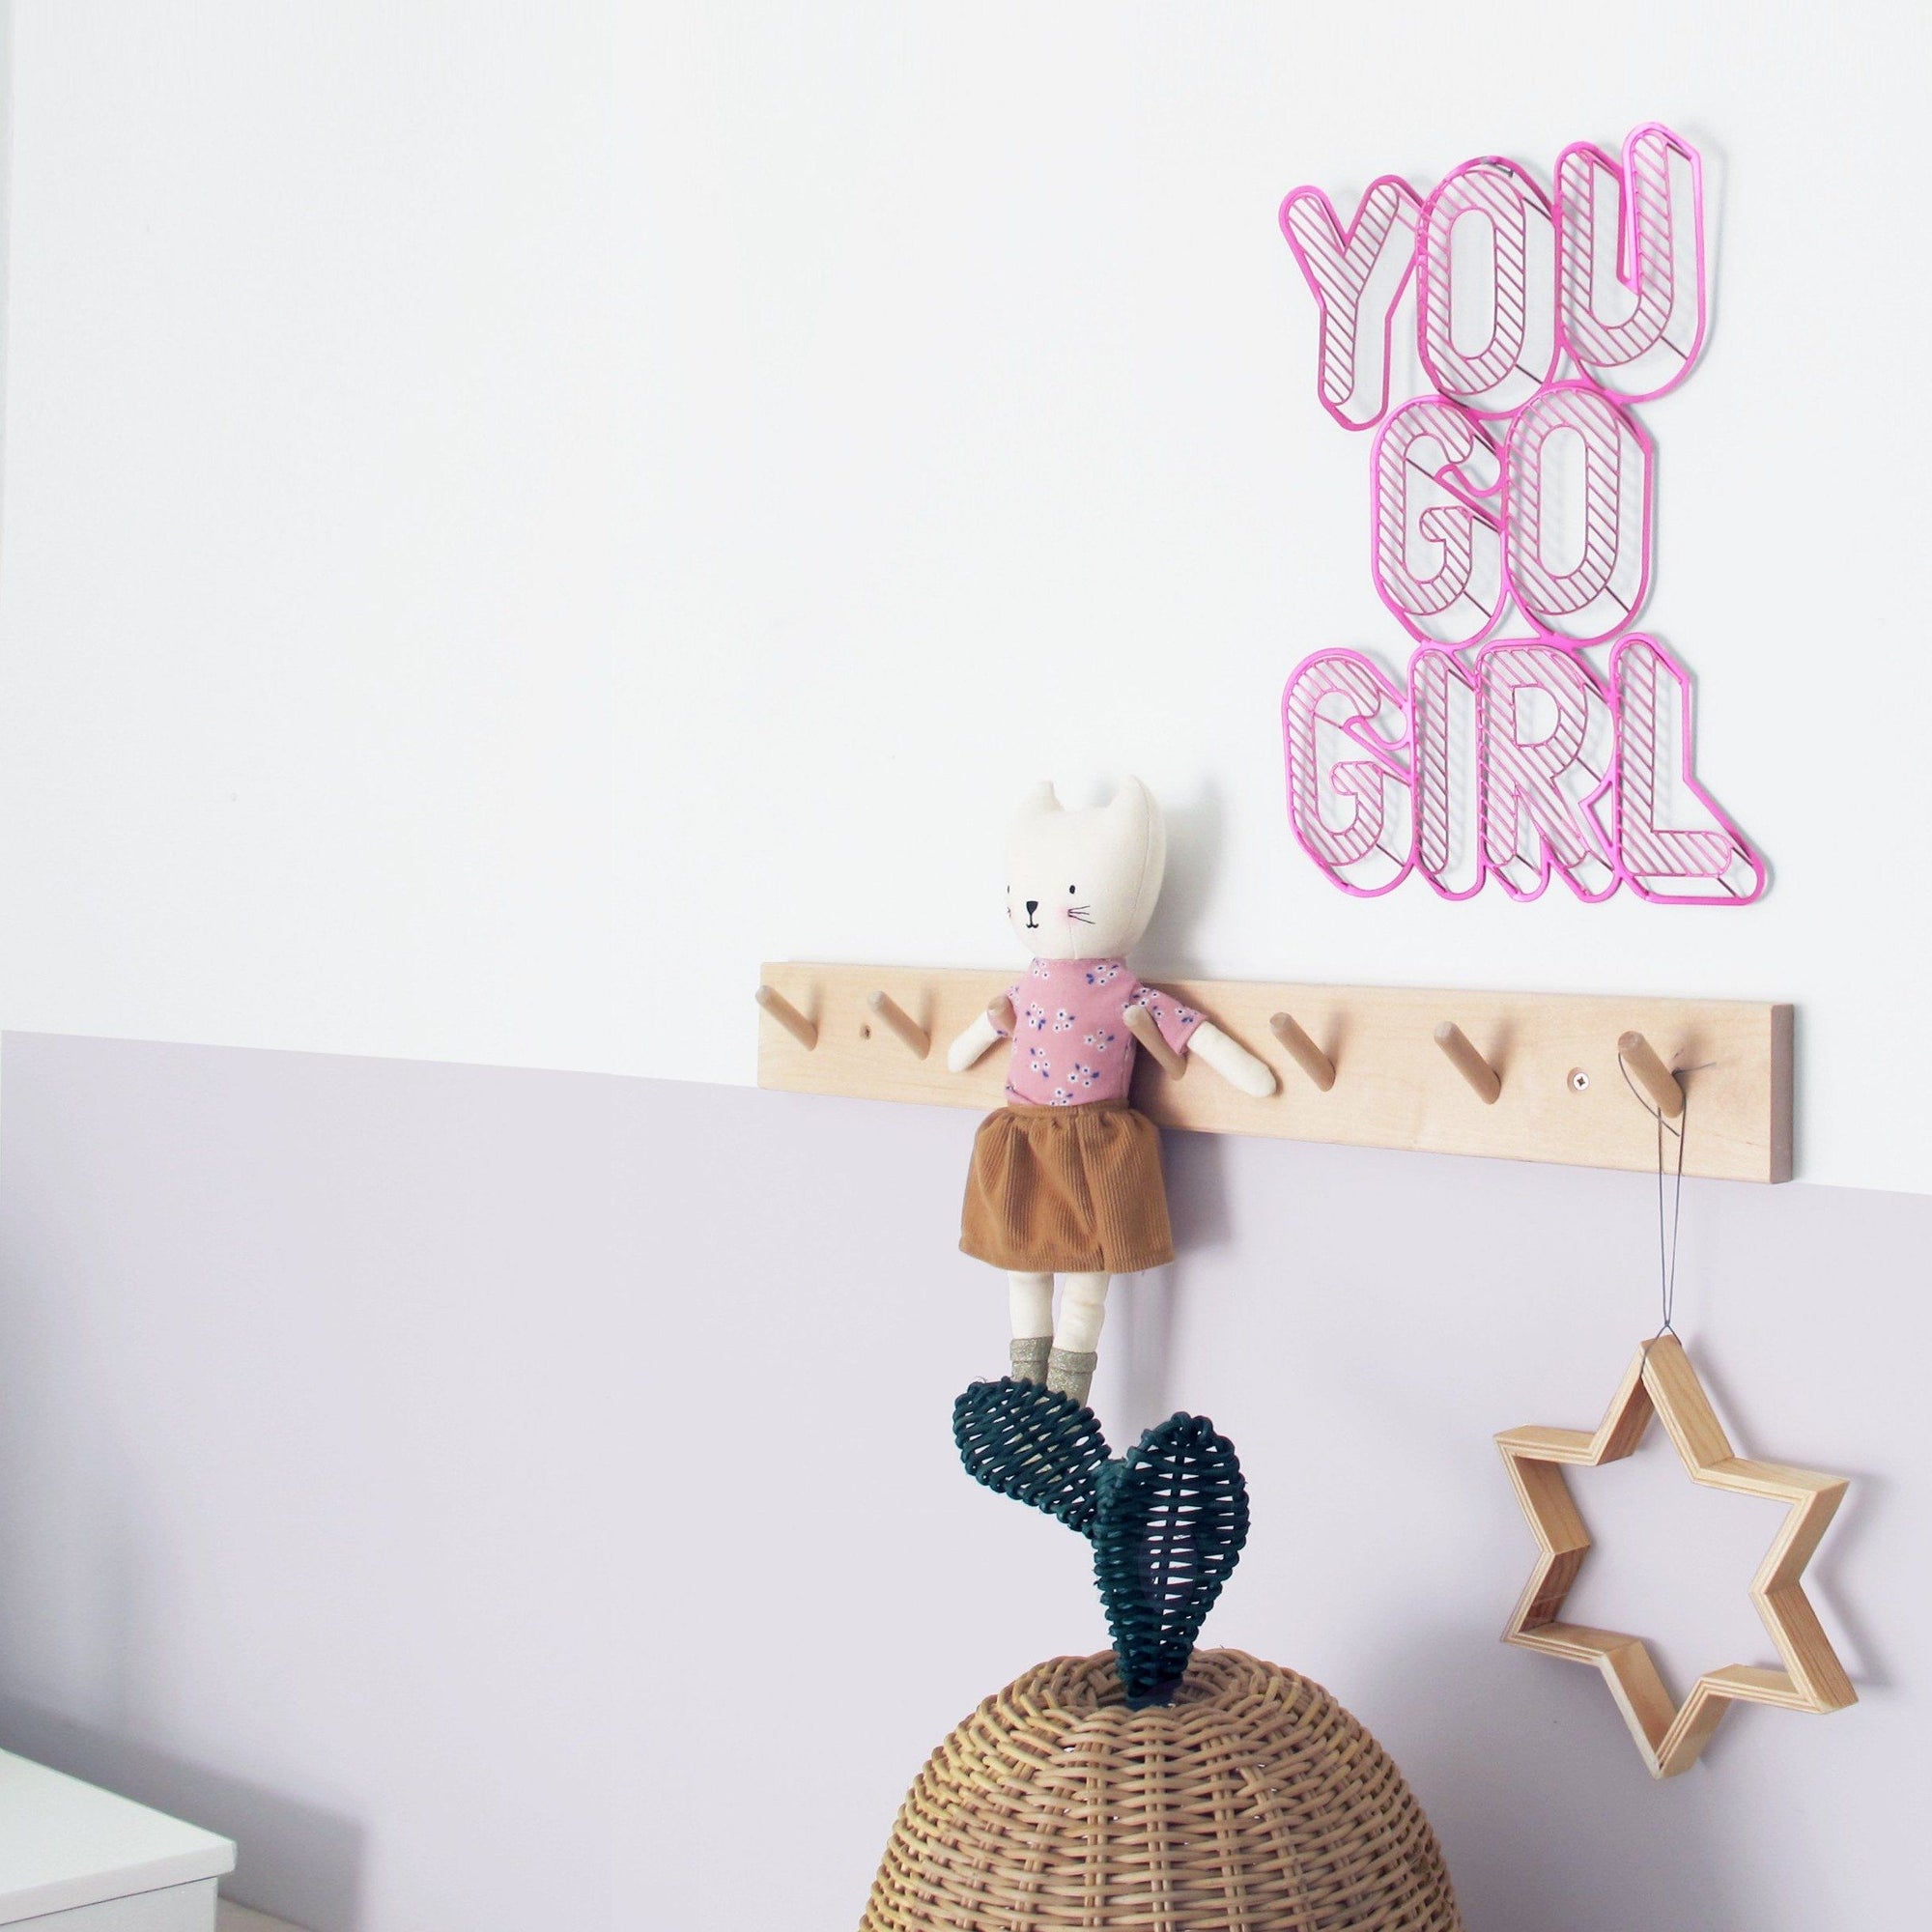 YOU GO GIRL Inspirational Phrase to hang on the wall | Wall Decor ShapeMixer 